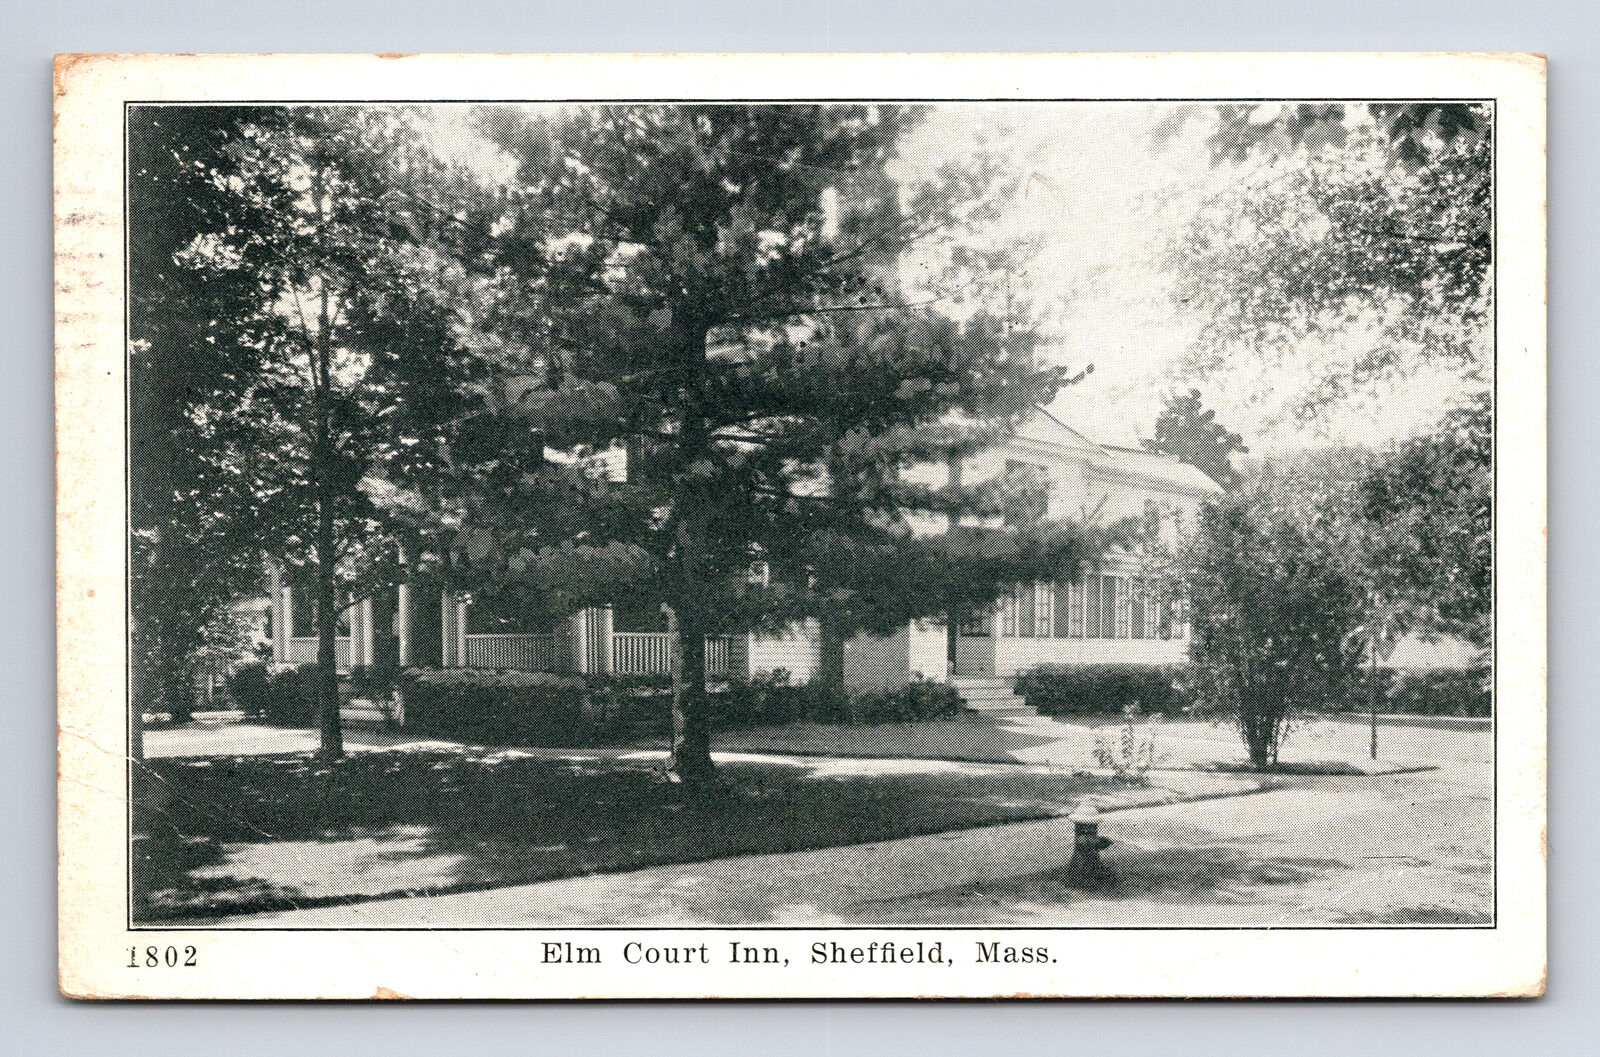 1926 Elm Court Inn Hotel Sheffield MA S K Simon 1802 Postcard